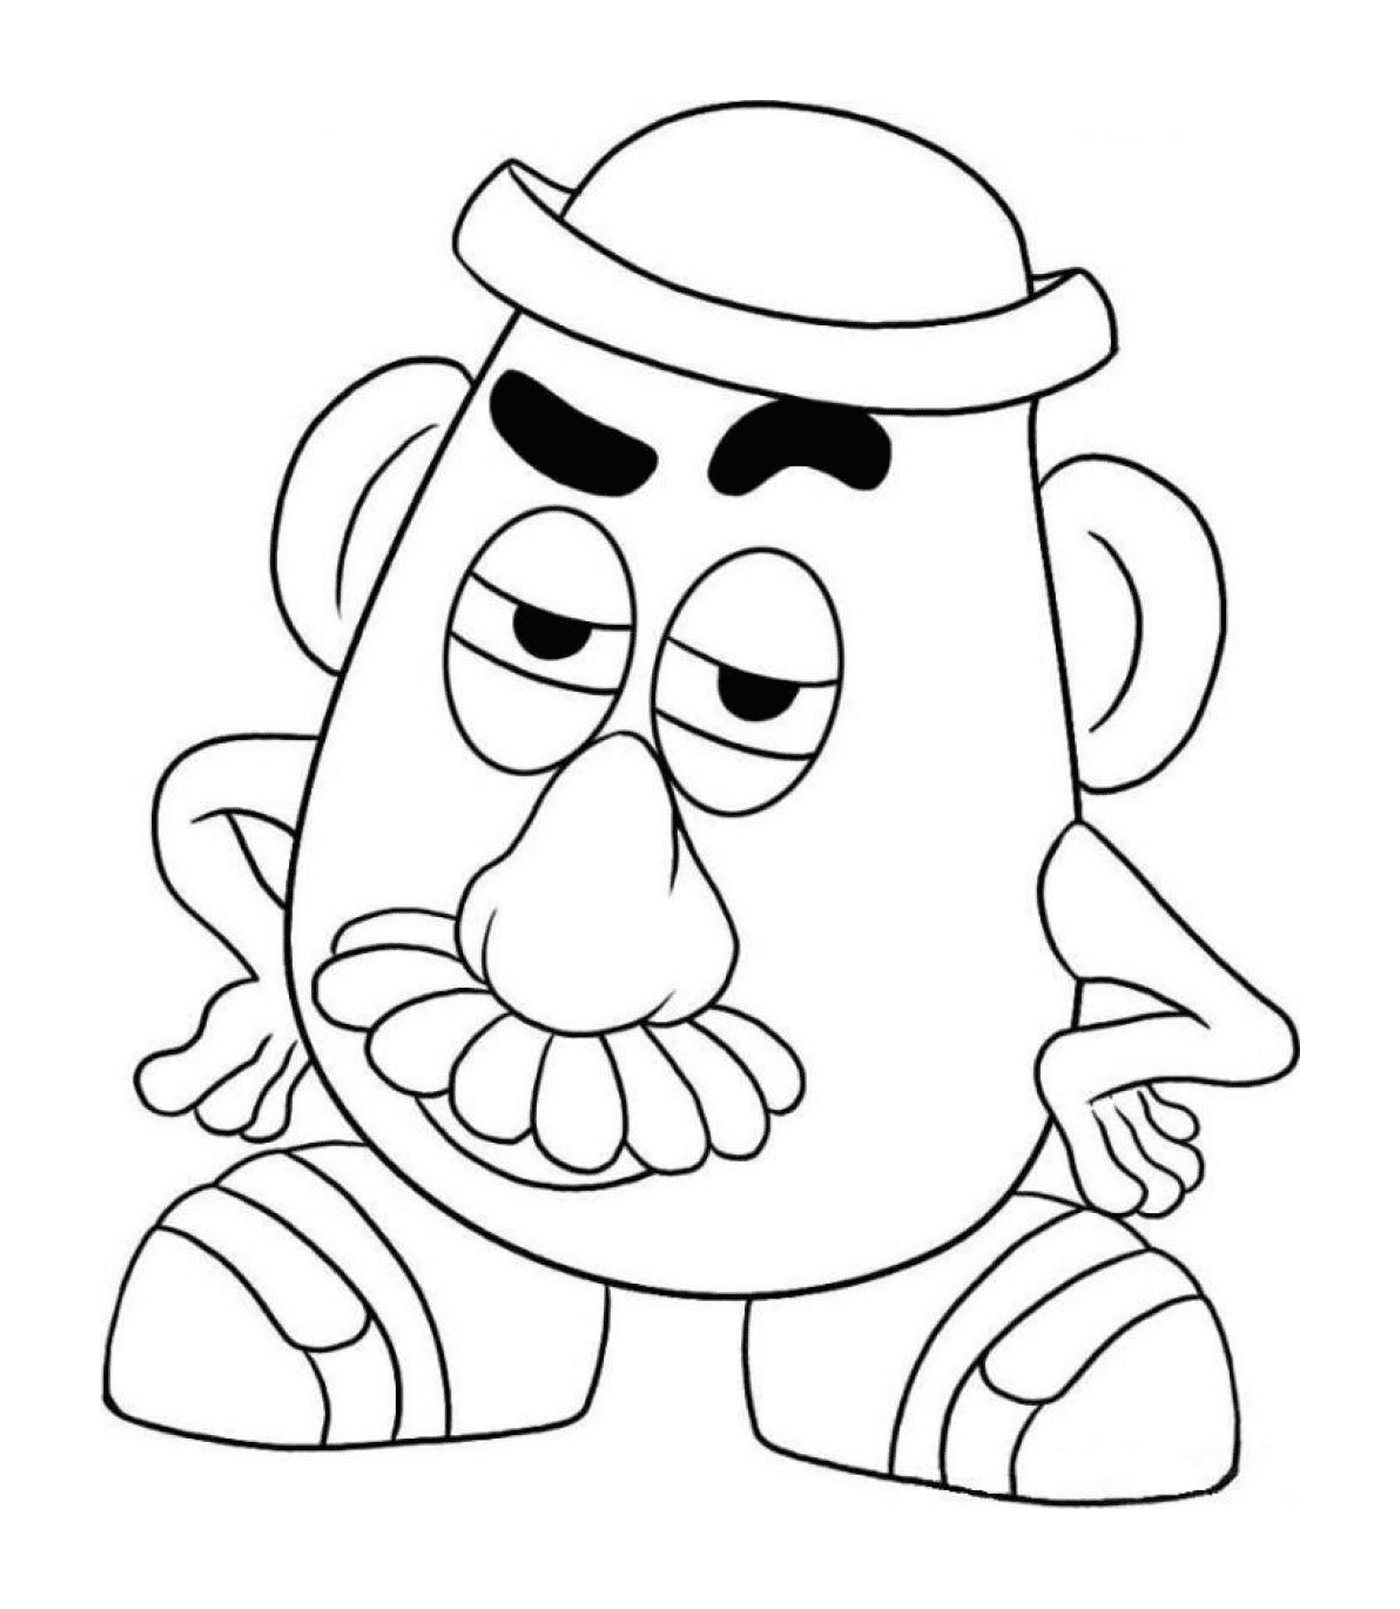   Monsieur Patate de Toy Story, personnage attachant 